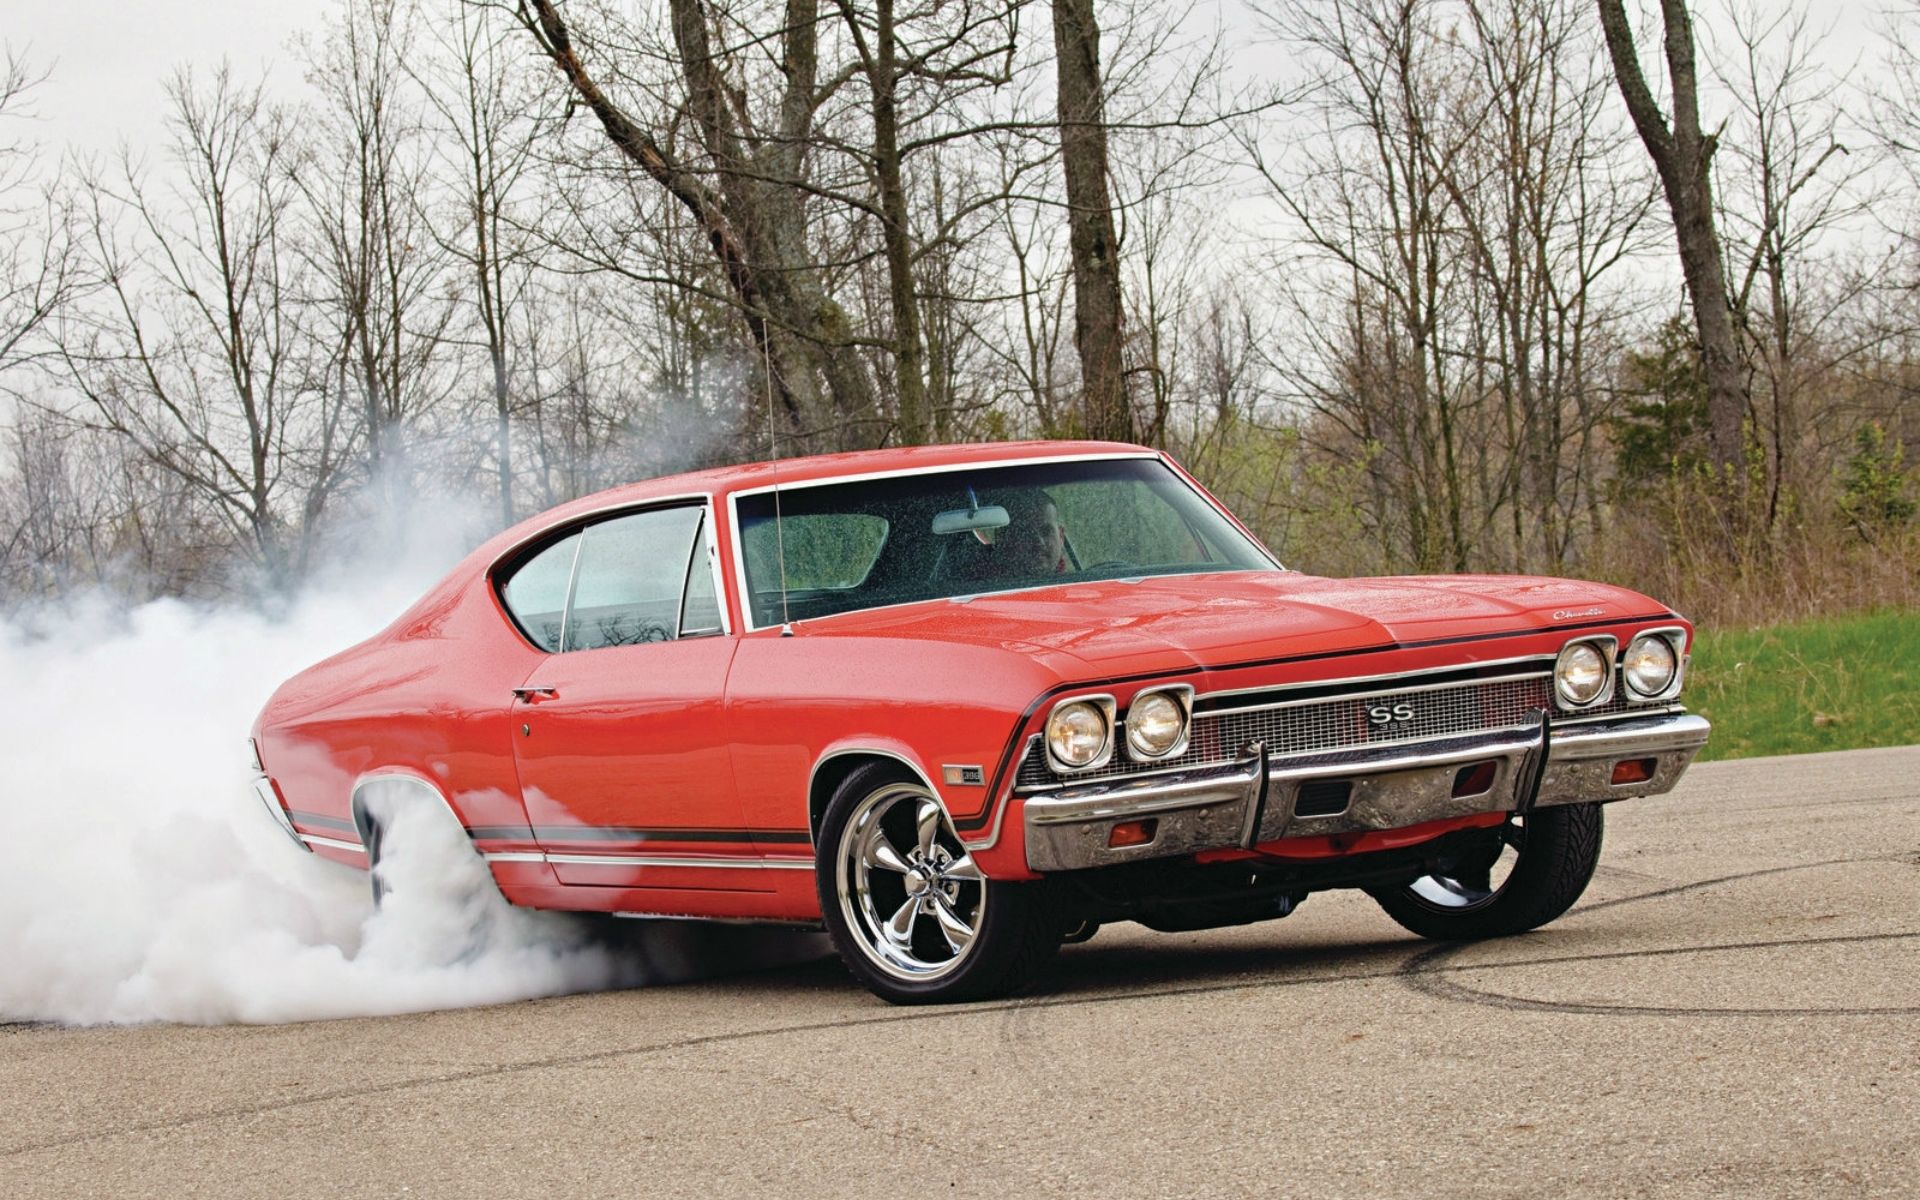 Chevrolet Chevelle SS 1968 burnout roads muscle cars hot rod smoke wallpaperx1200